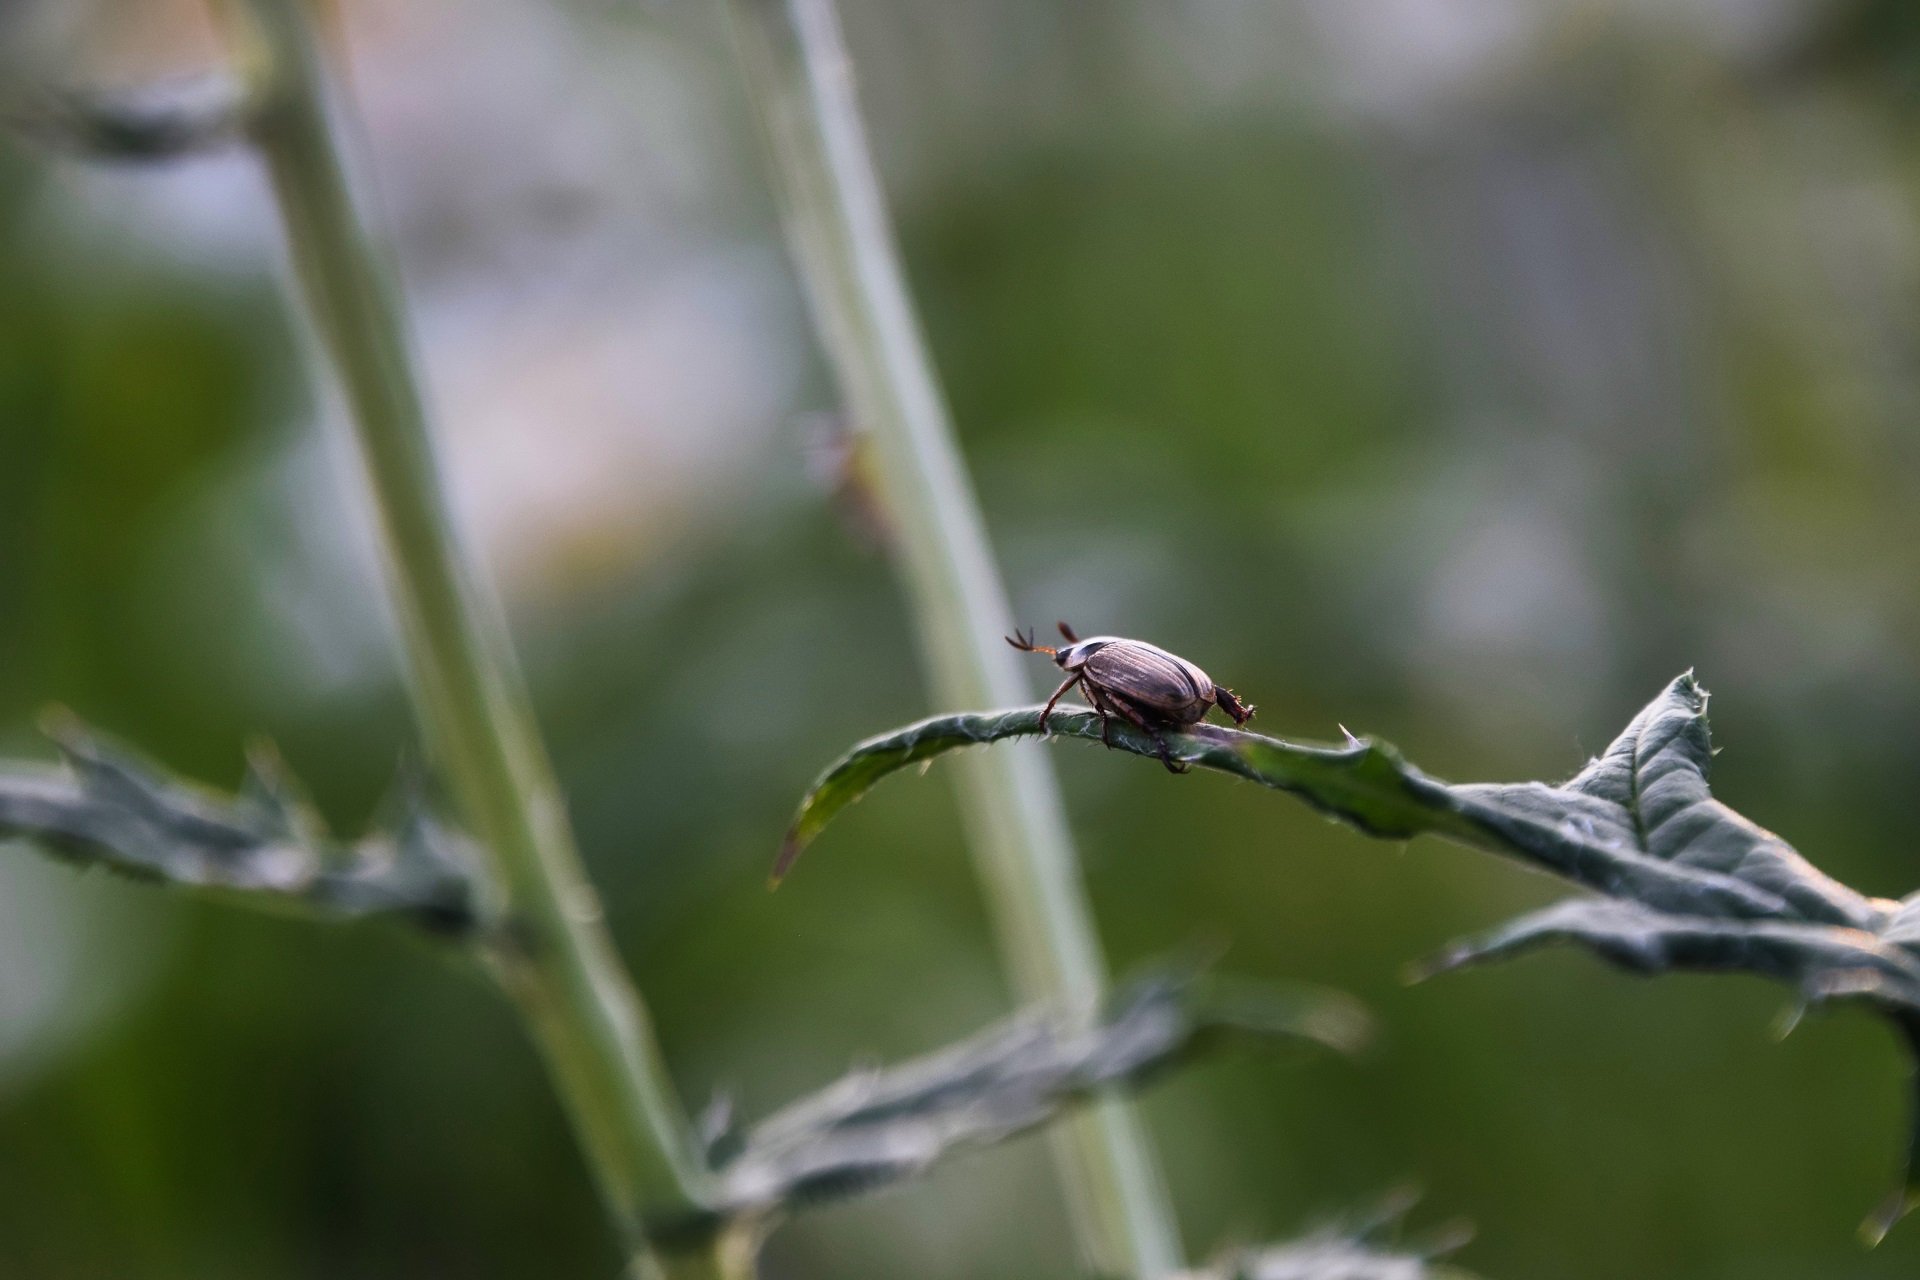 A Japanese Beetle crawls on a leaf.